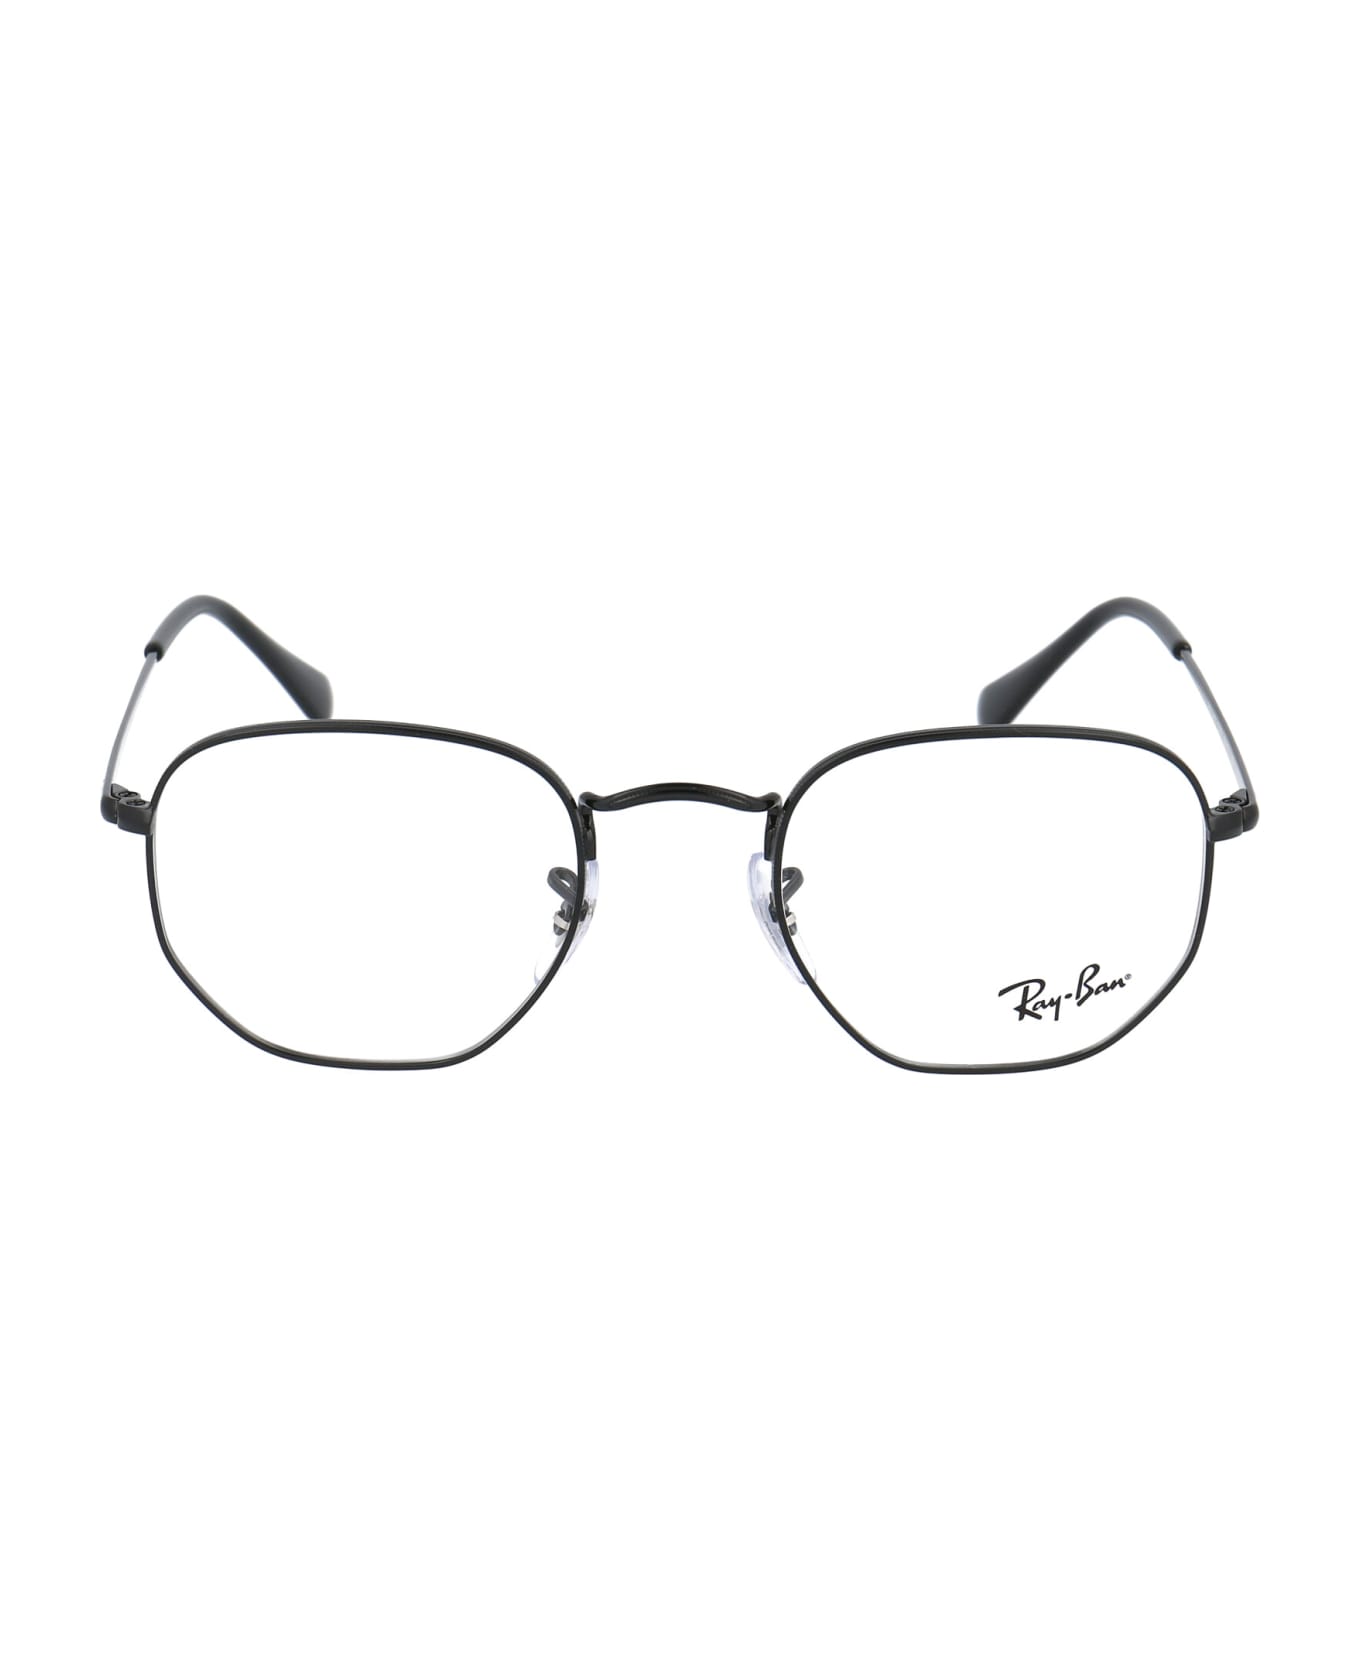 Ray-Ban Hexagonal Glasses - 2509 BLACK